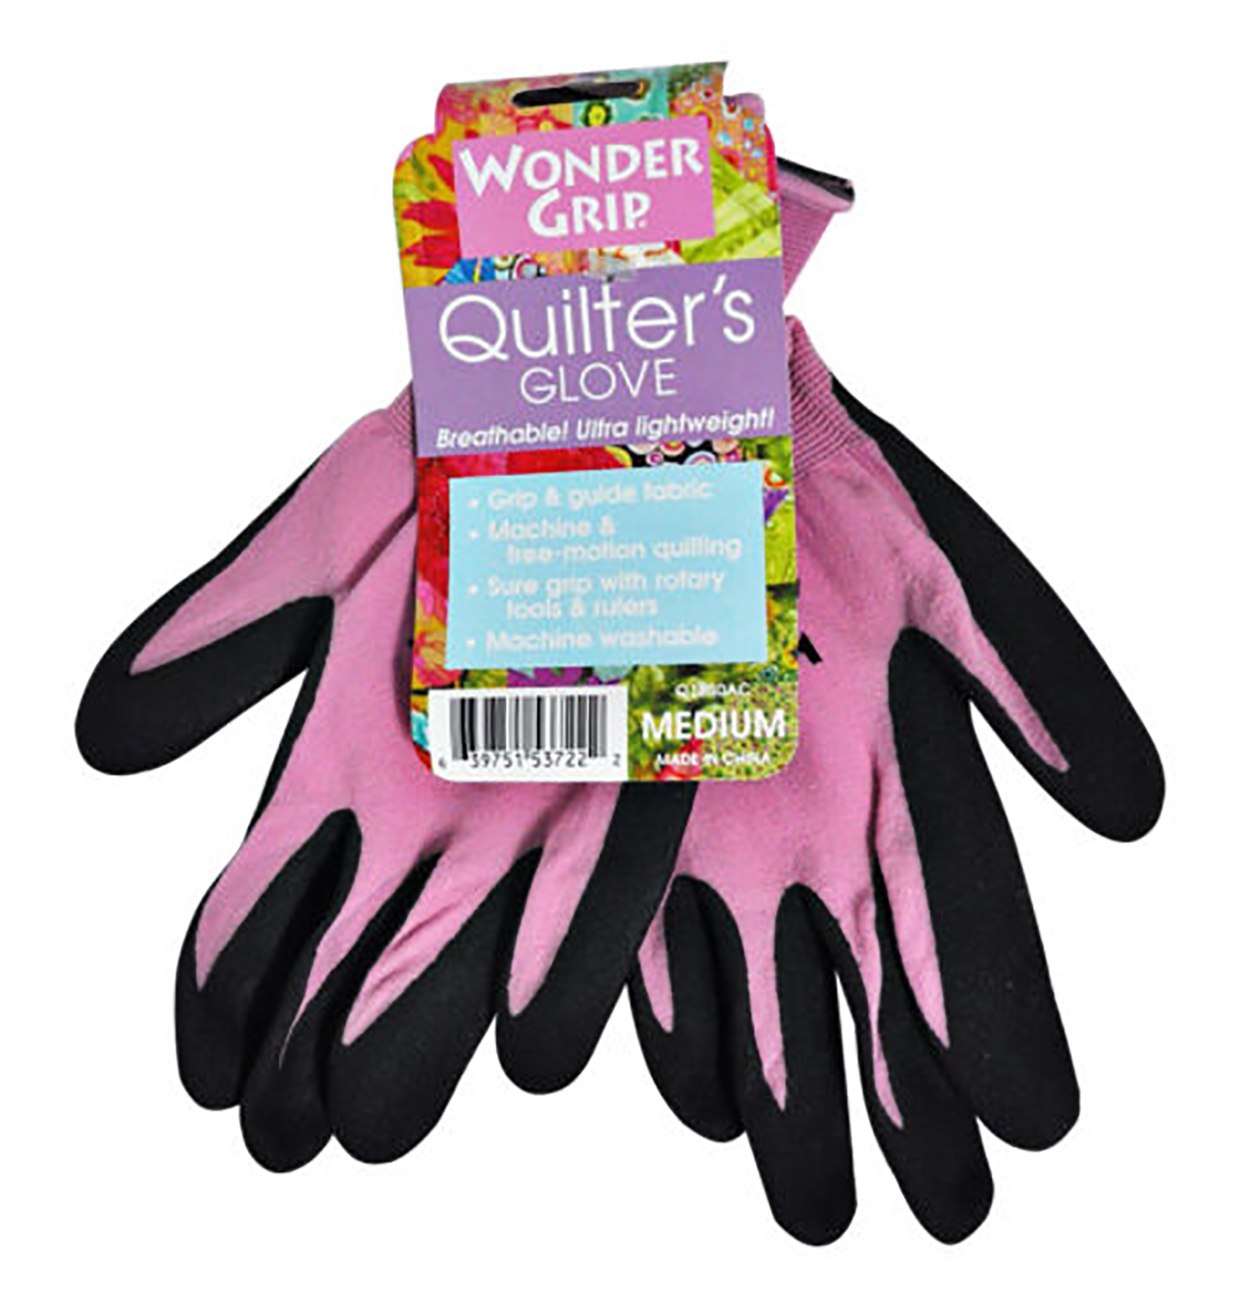 Fons & Porter Quilting Gloves-Larger - 072879078565